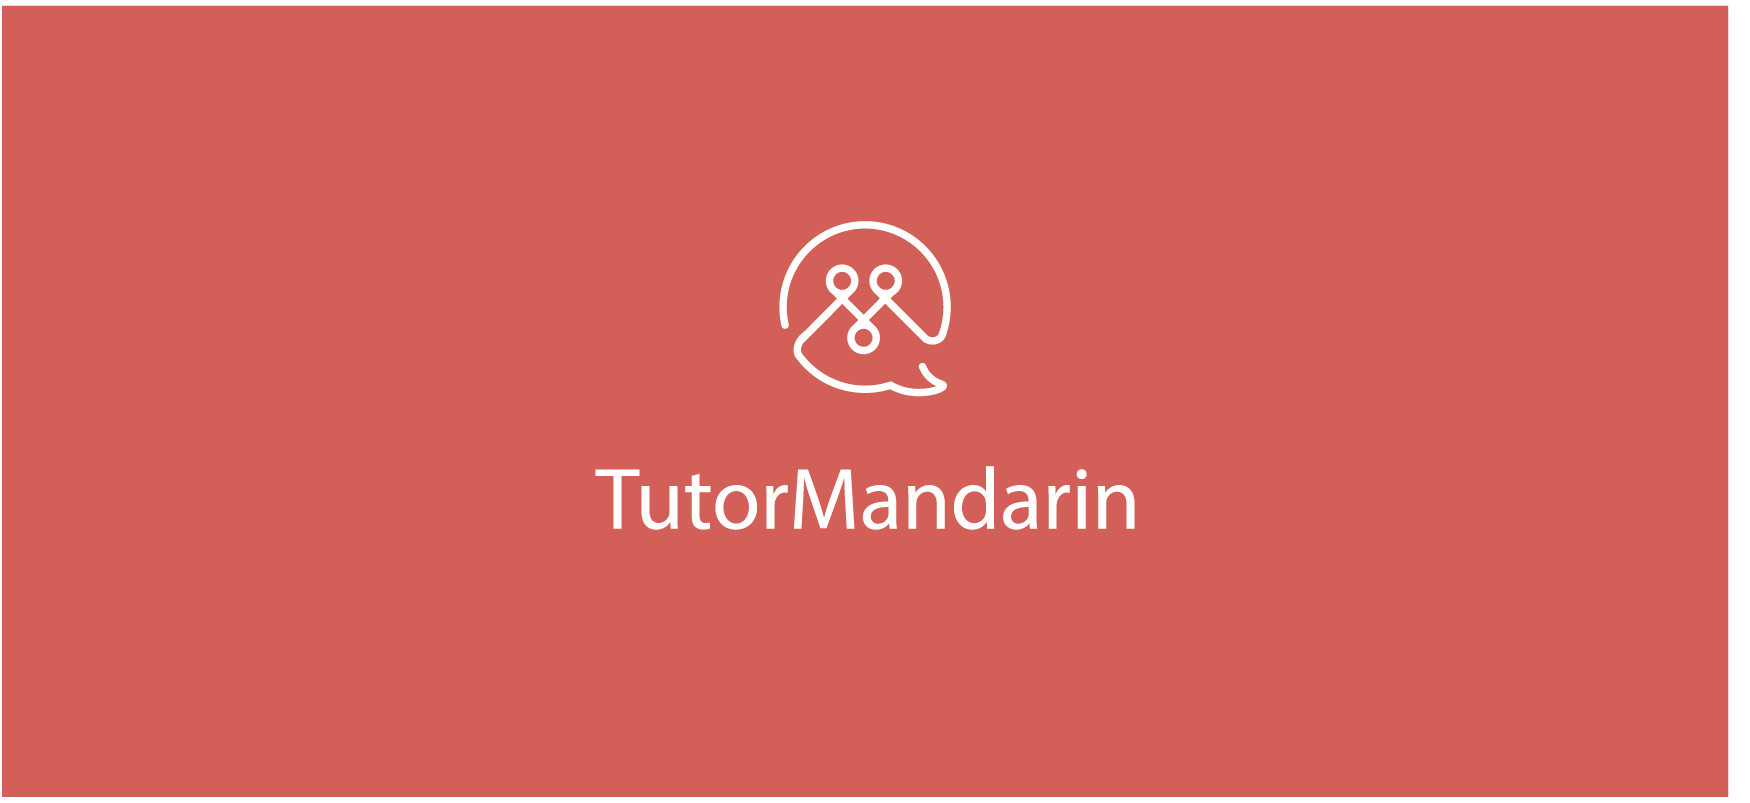 TutorMandarin Press Kit - Standing logo white